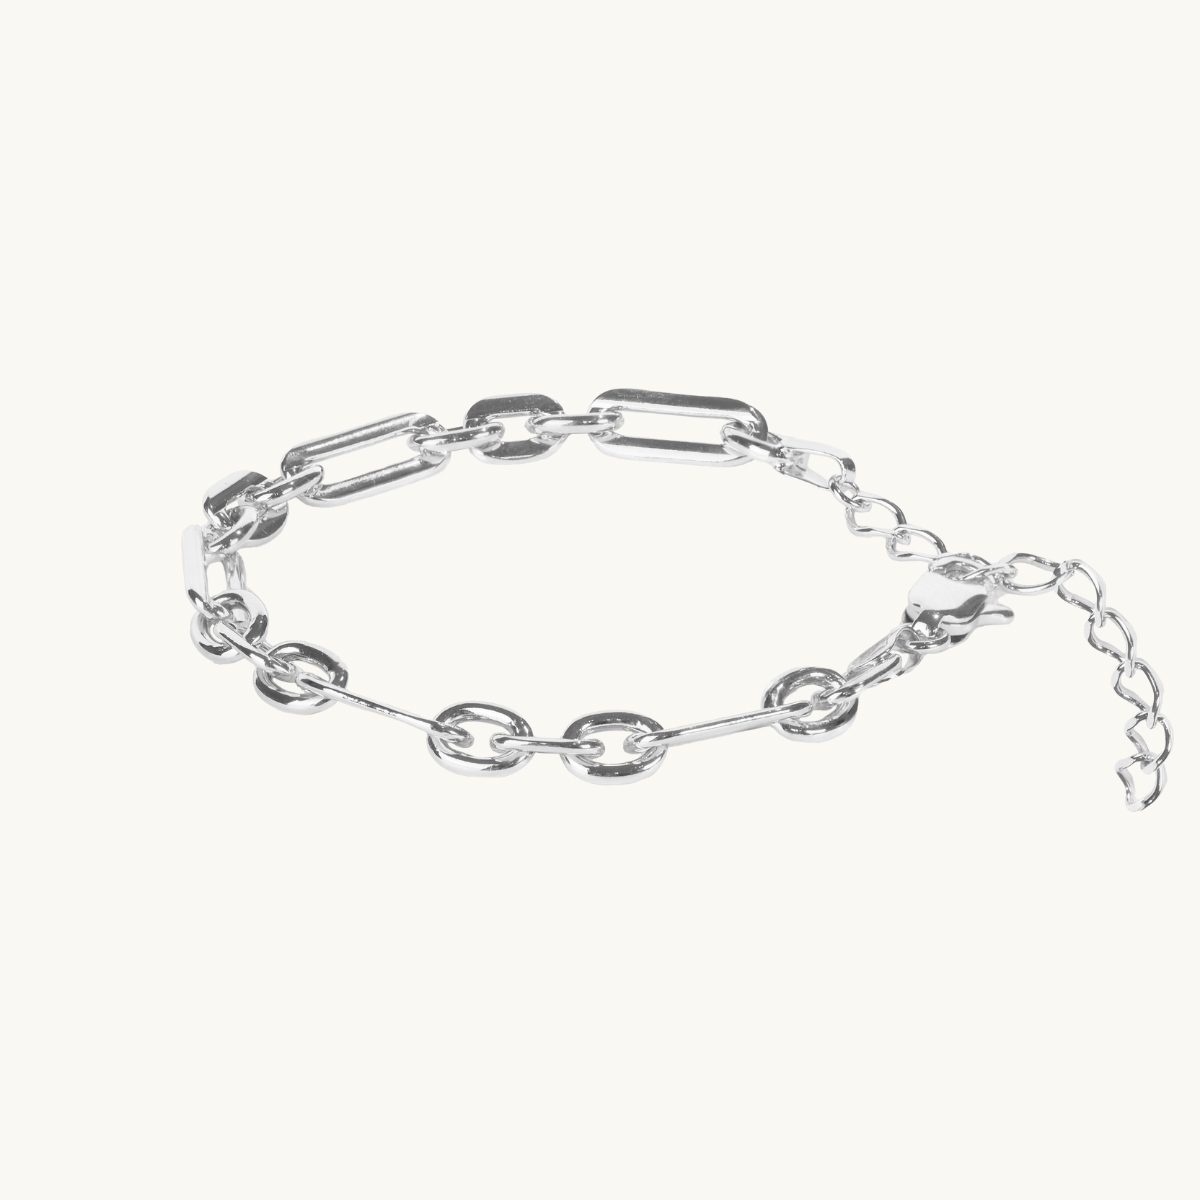 A silver bracelet with links